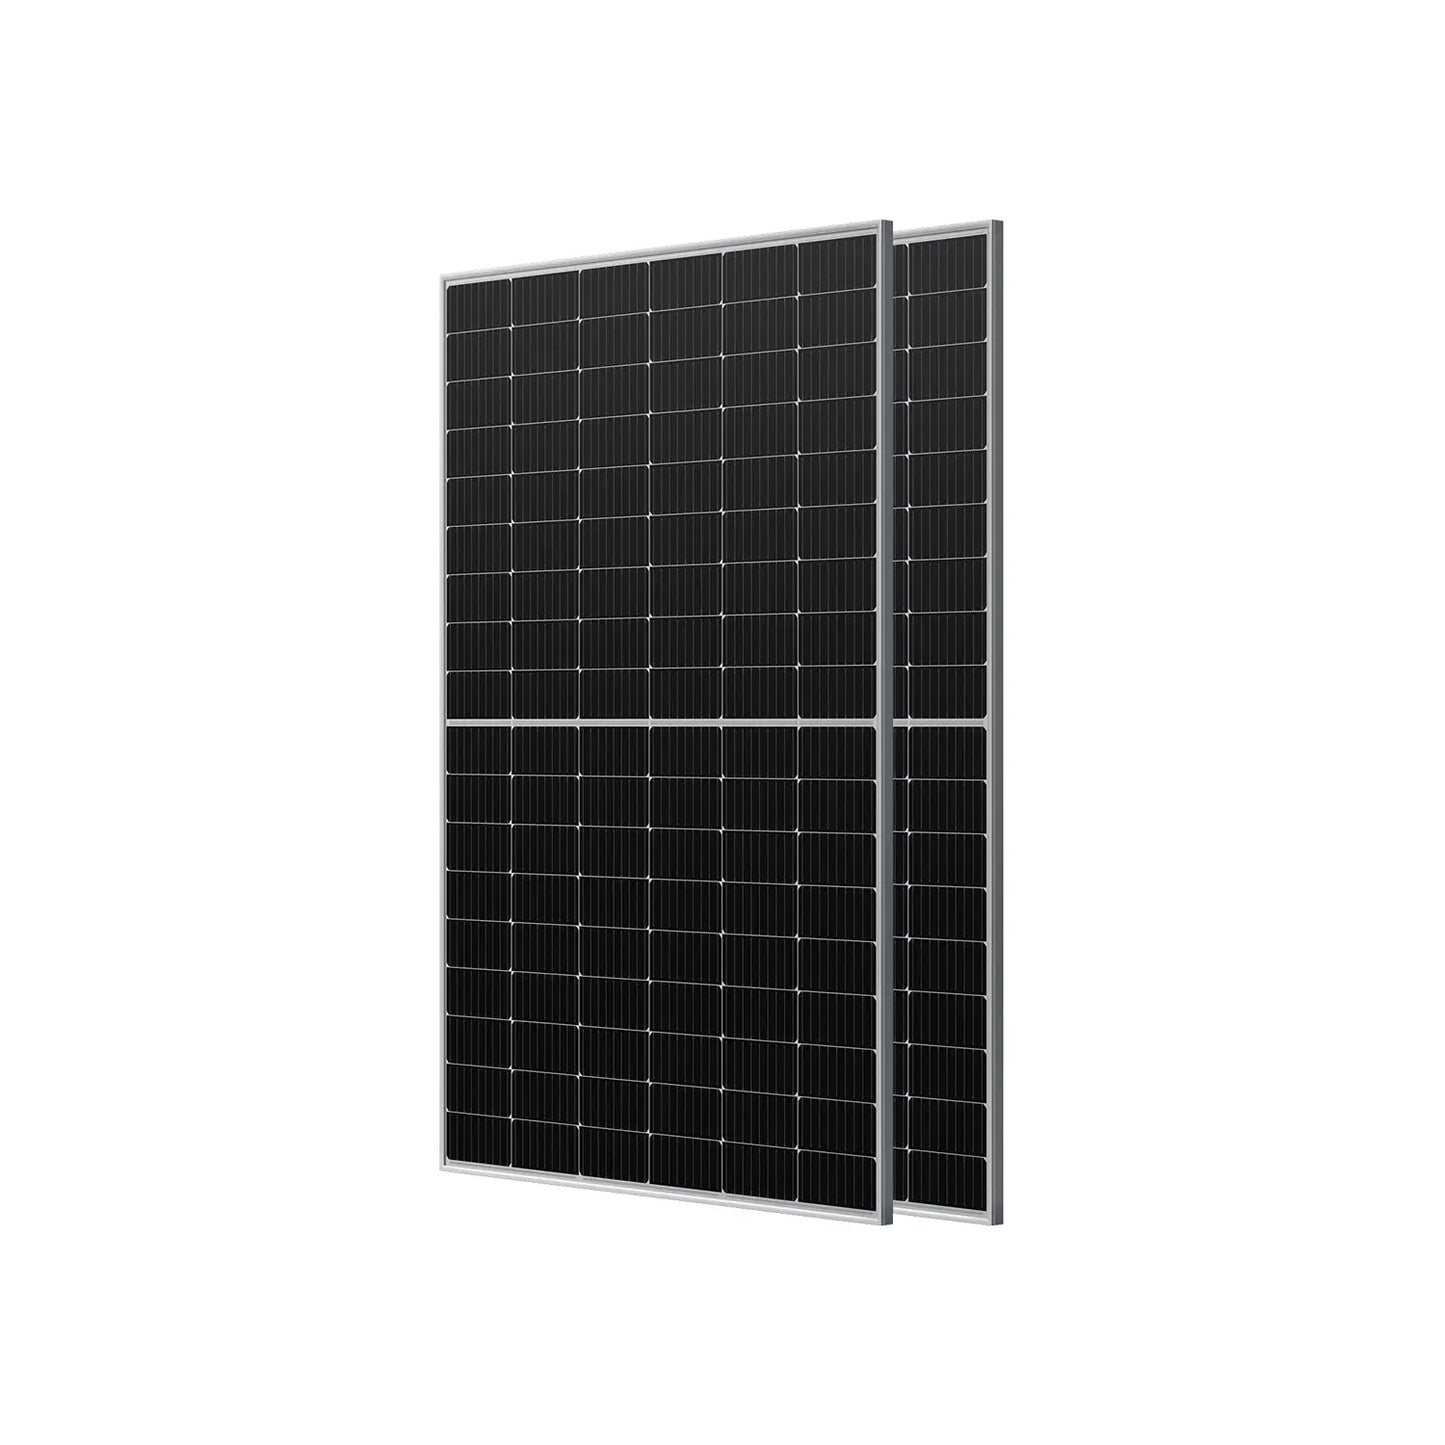 Canadian Solar 600W Super High Power Mono PERC HiKU7 Solar Panel with T6